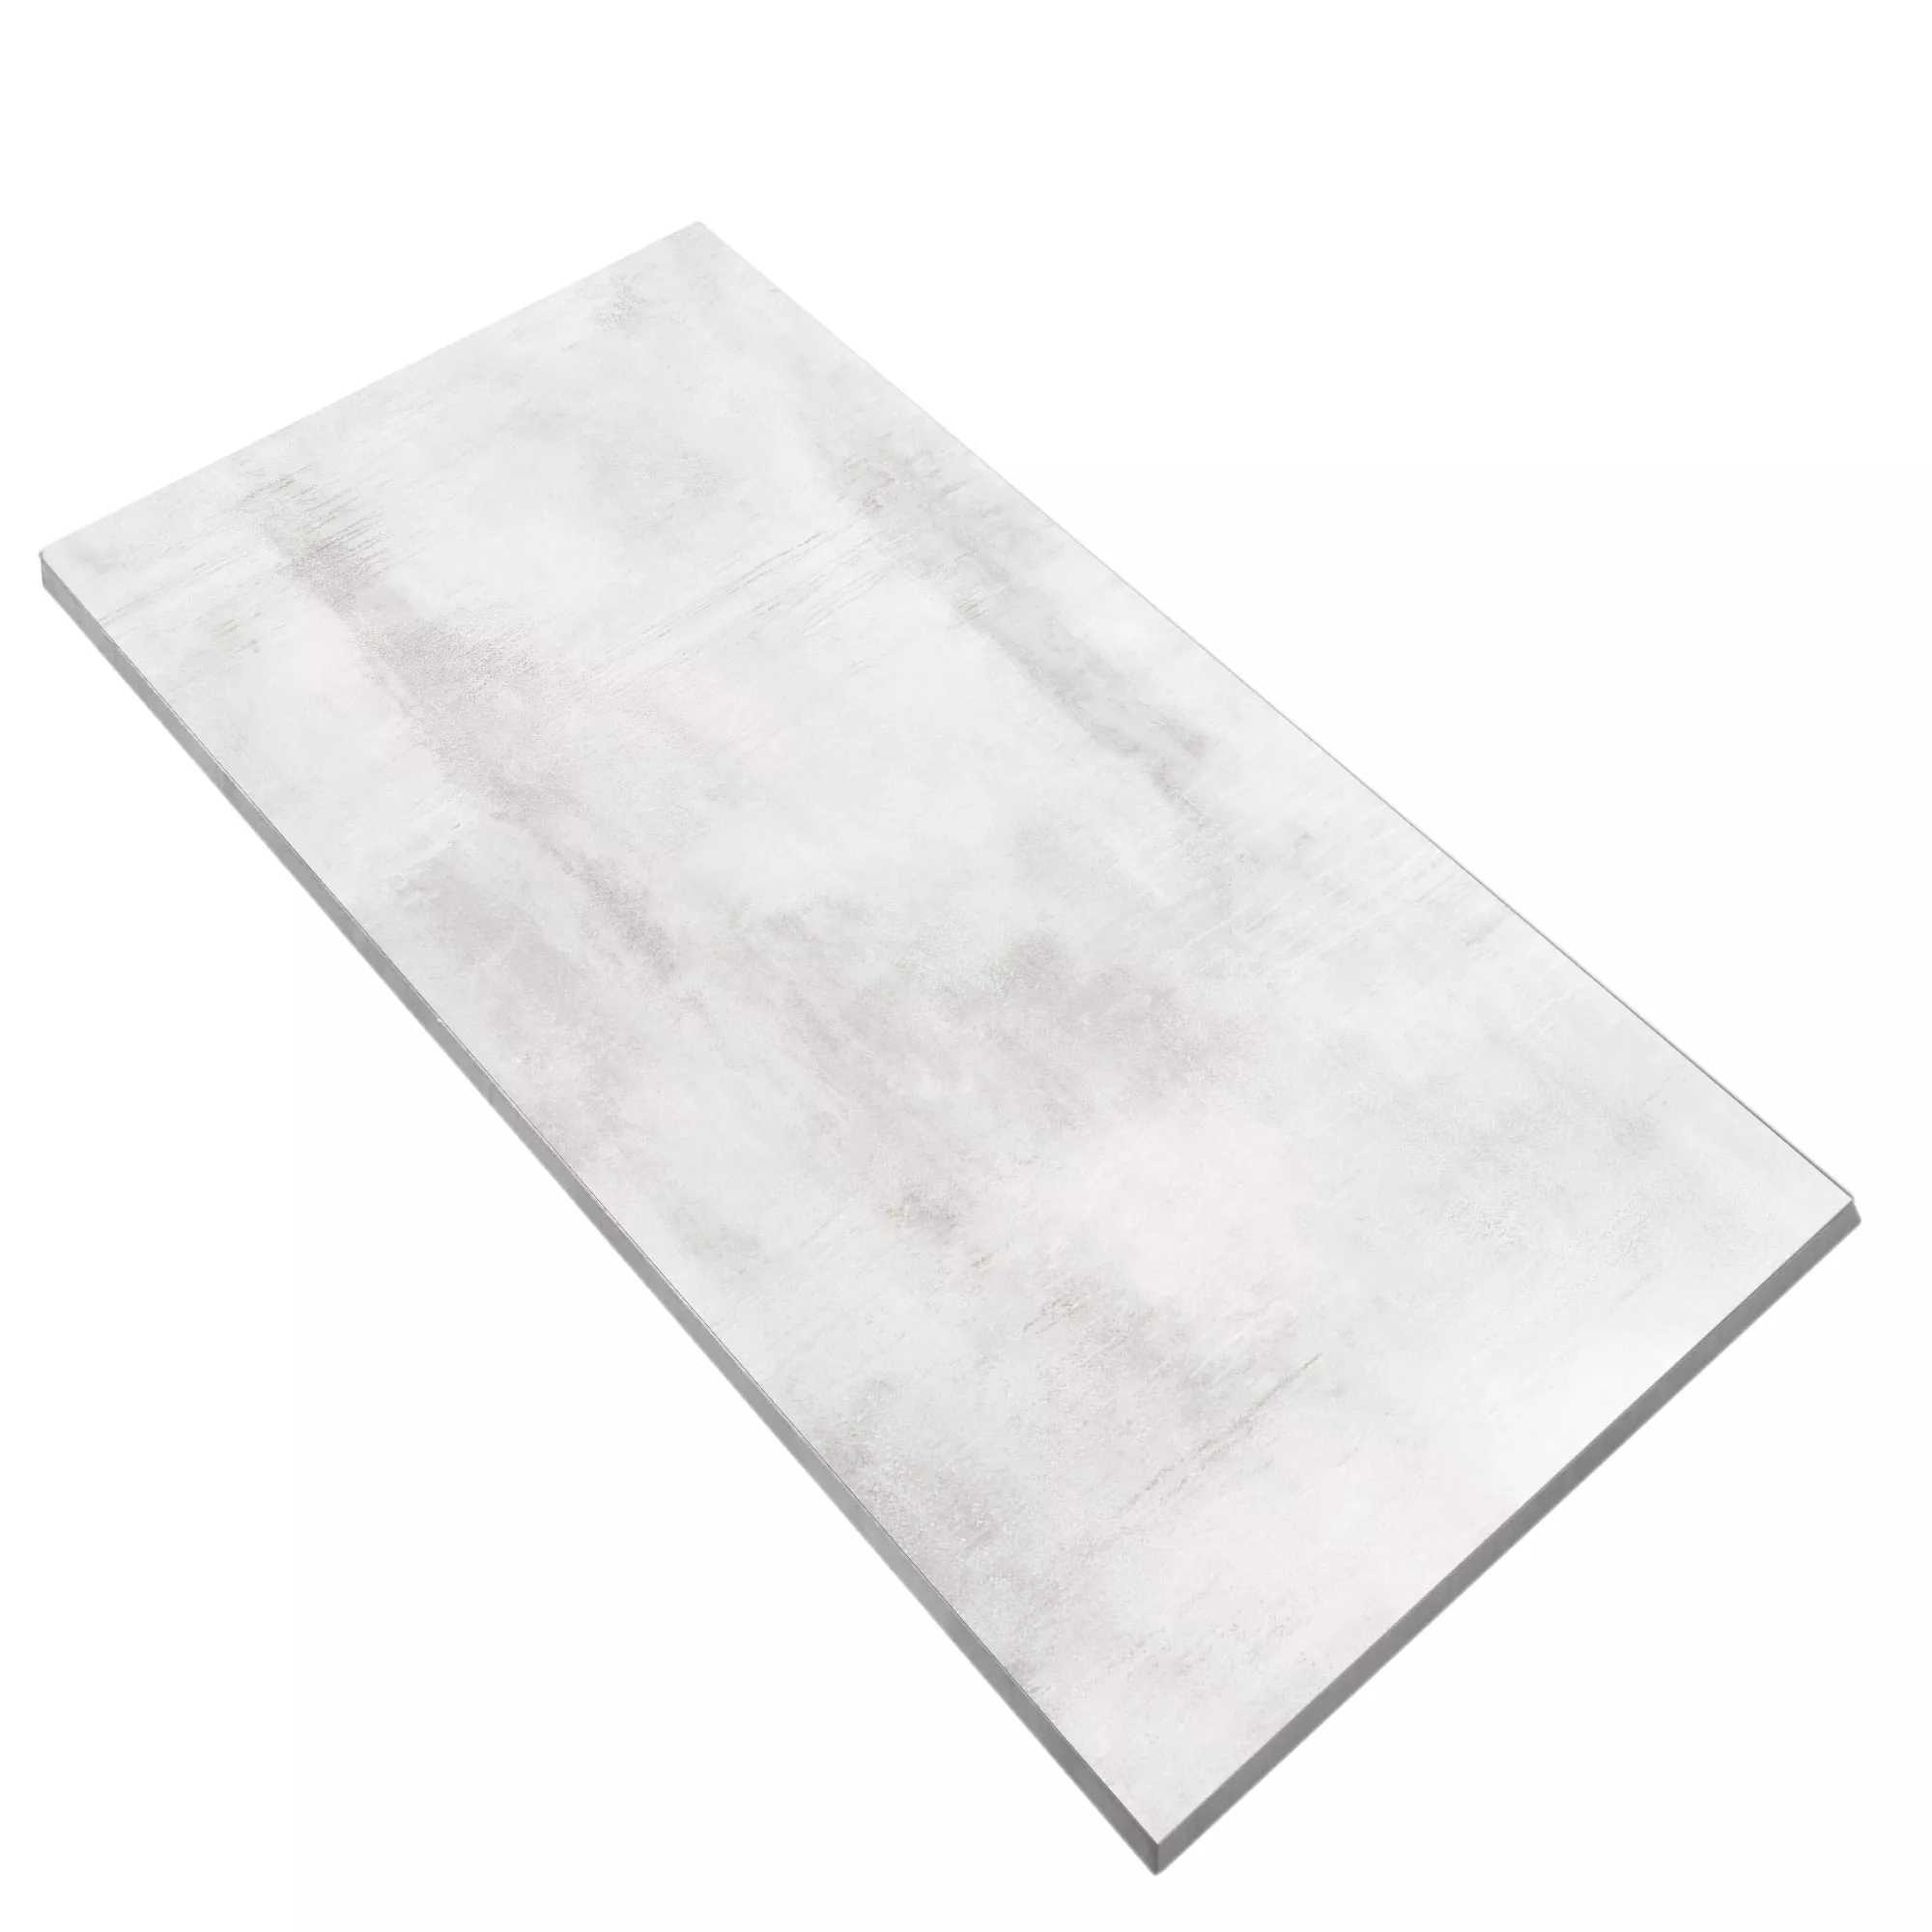 Vzorek Podlahové Dlaždice Tycoon Betonový Vzhled R10 Stříbrná 30x60cm